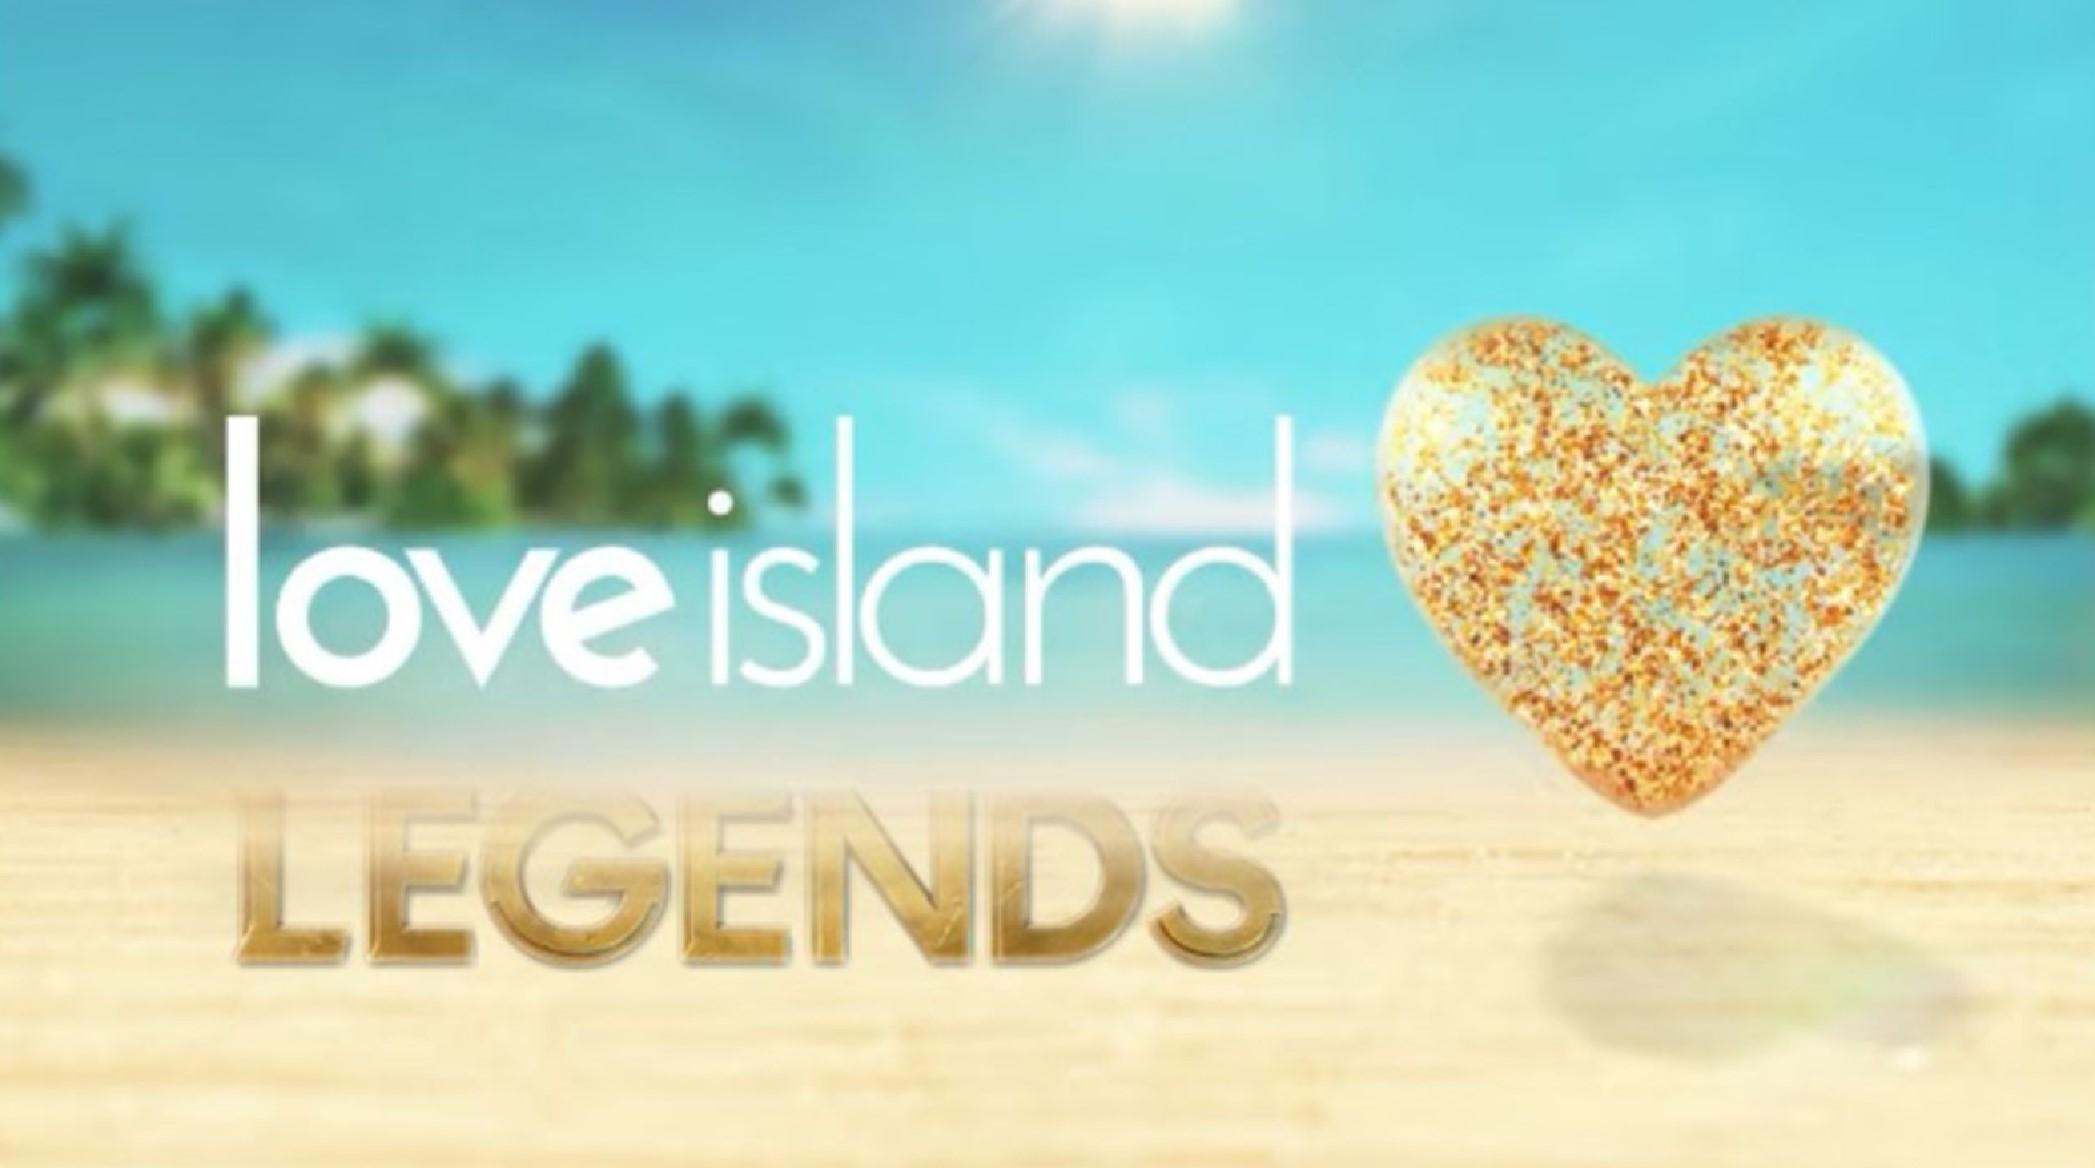 Love Island Legends mockup artwork